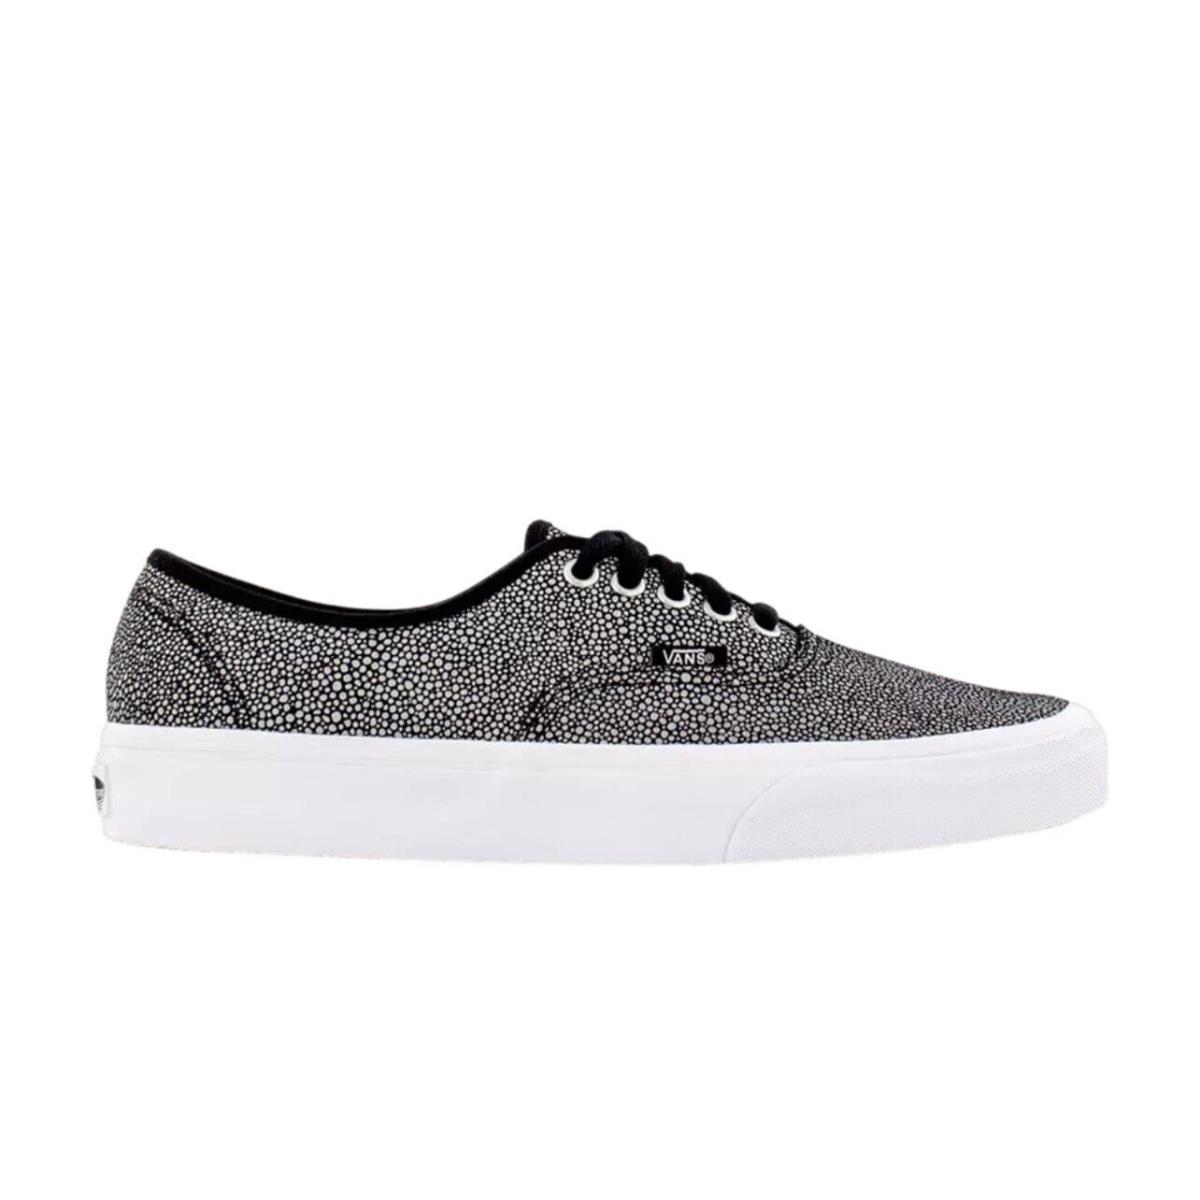 Vans Mens Alien Skin Fashion Casual Sneakers Shoes Gray Black Sz 10